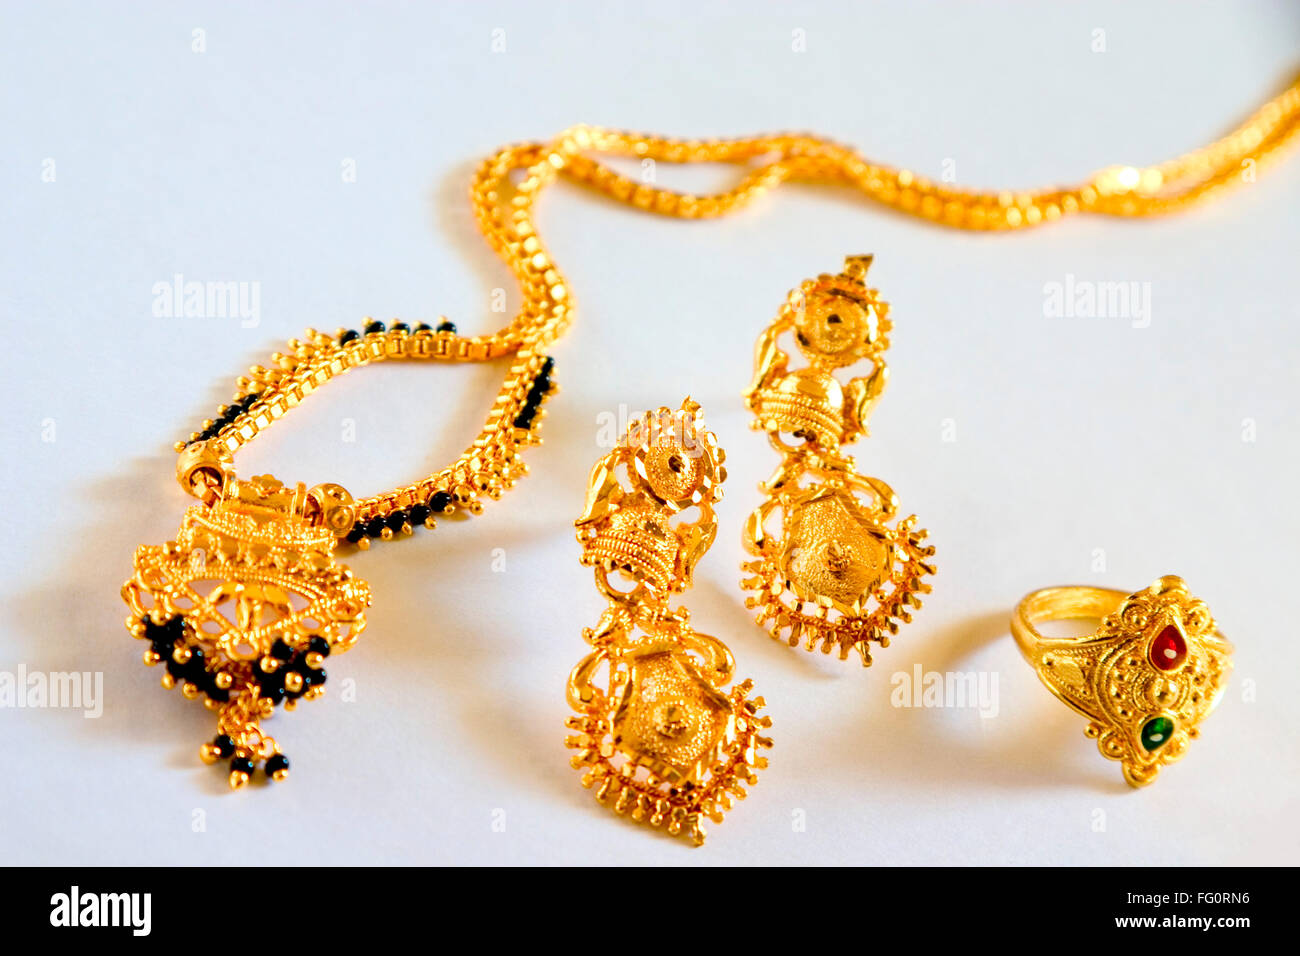 Concept gold black beads necklace mangalsutra bride symbol marriage ...